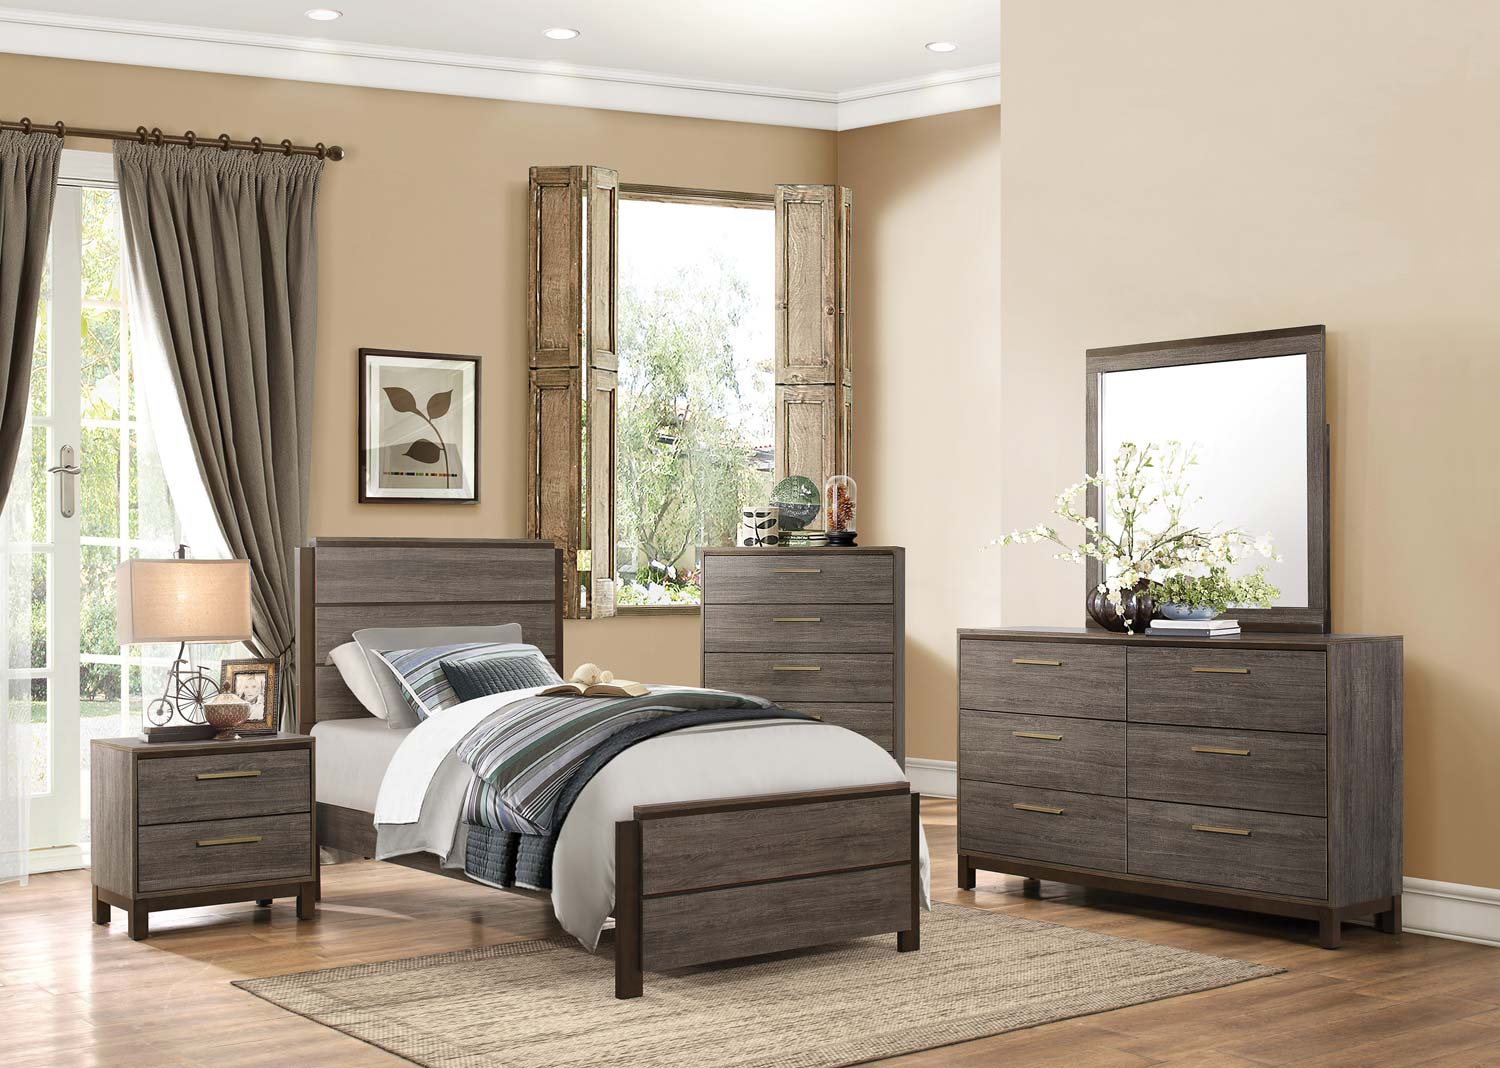 Vestavia Youth Bedroom Set - Adams Furniture